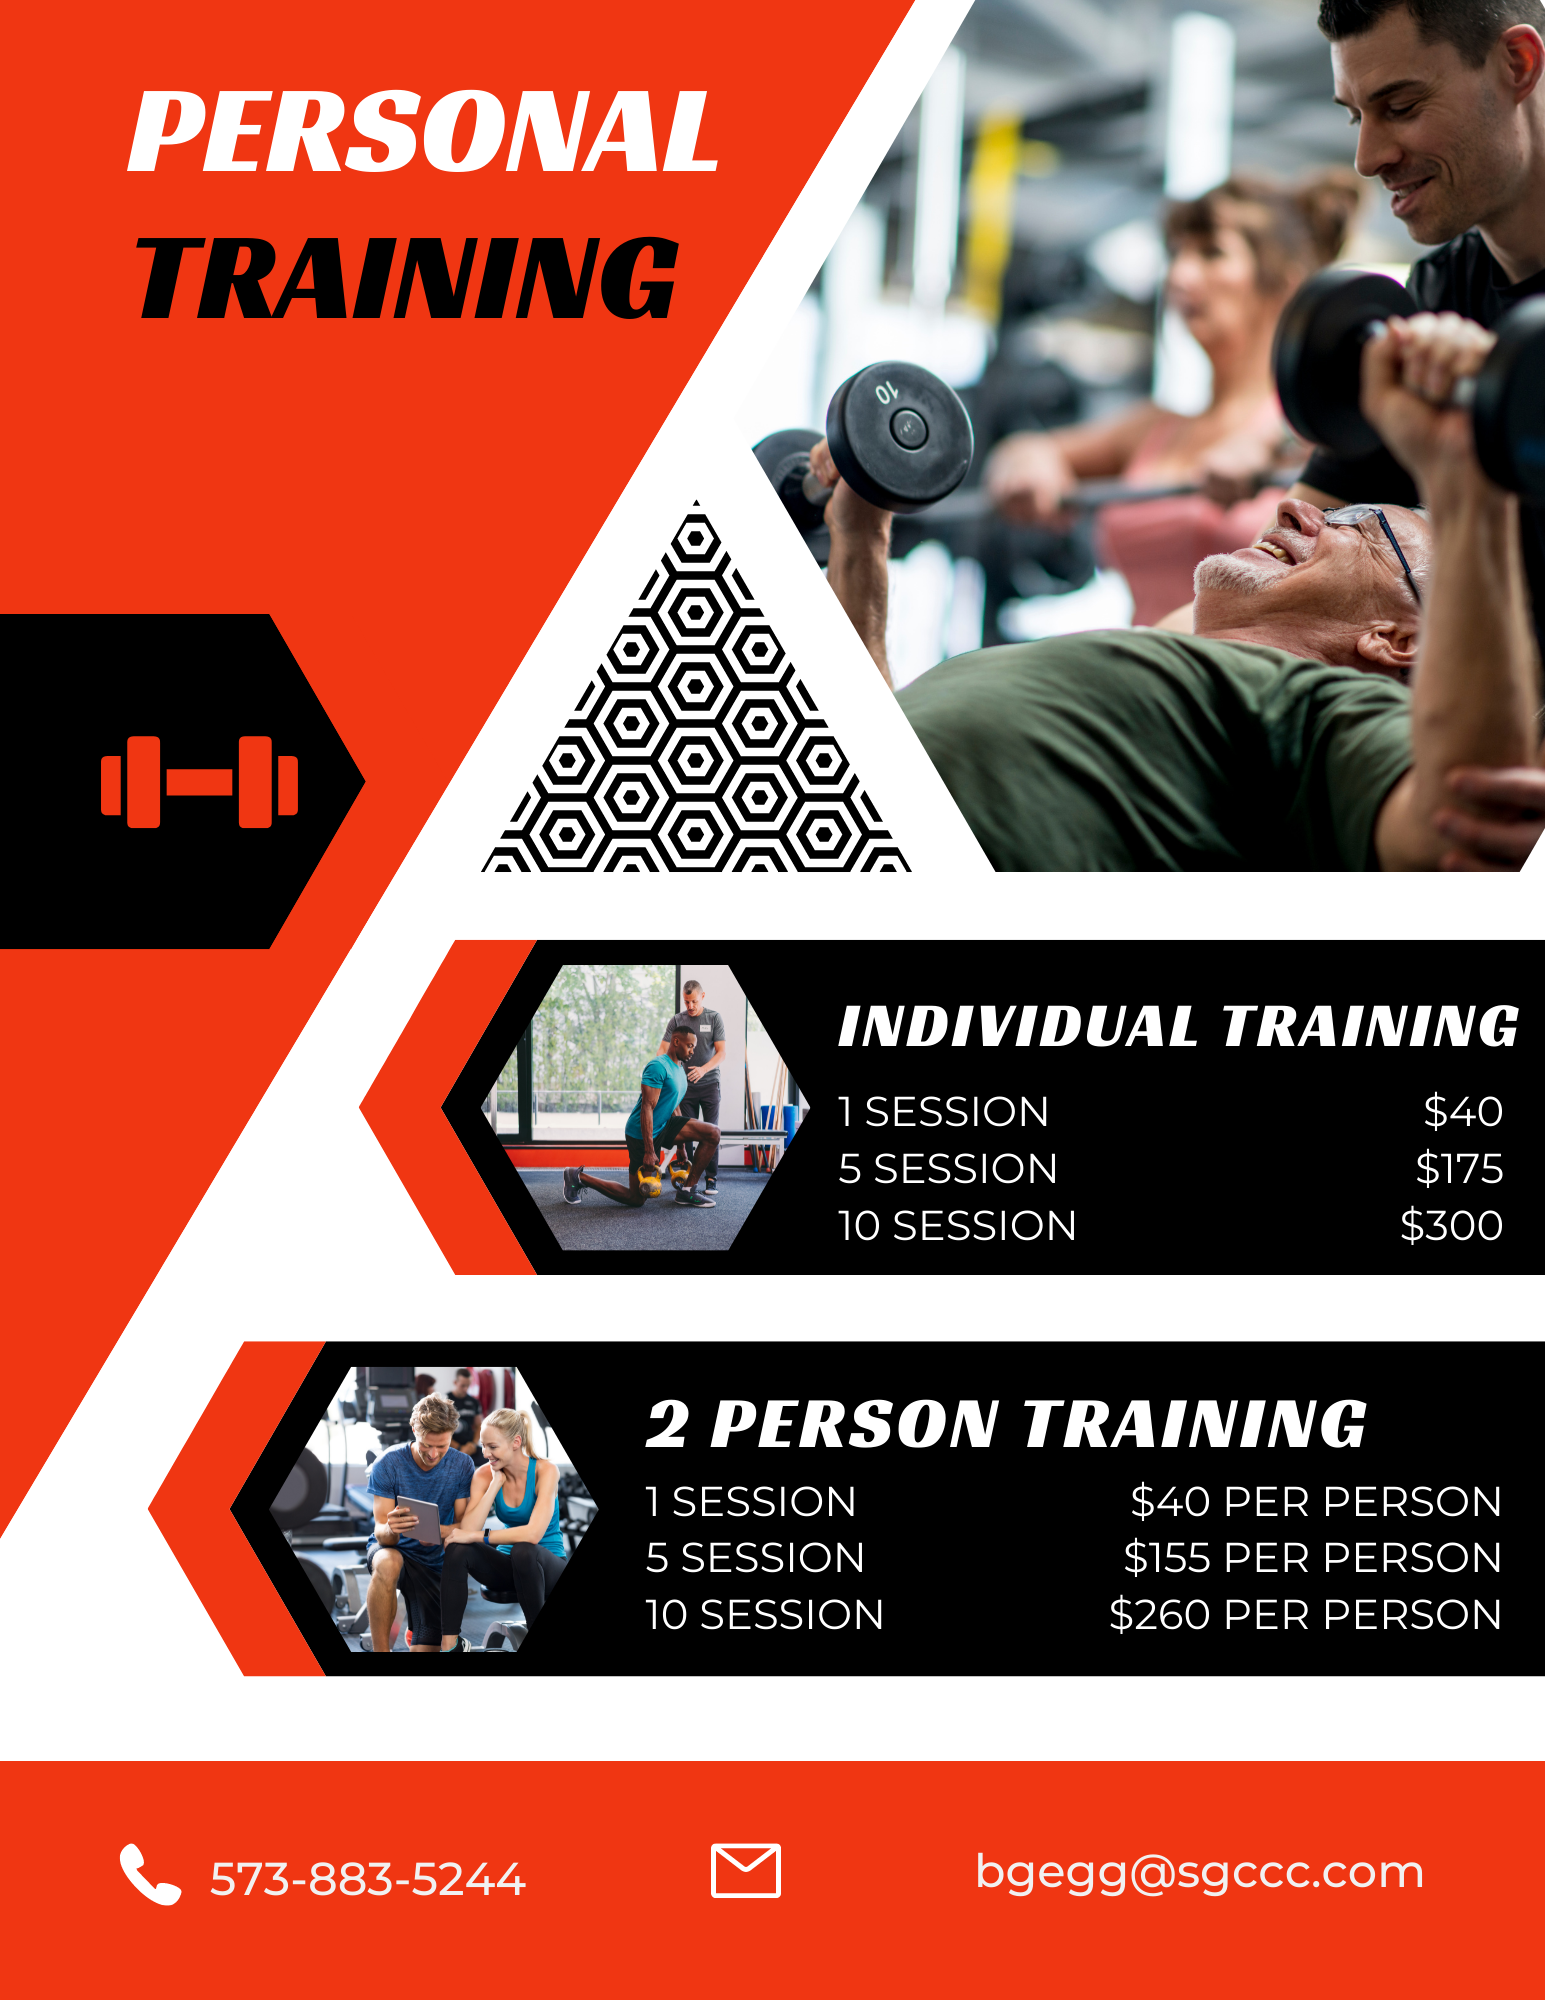 Personal Training | SGCCC